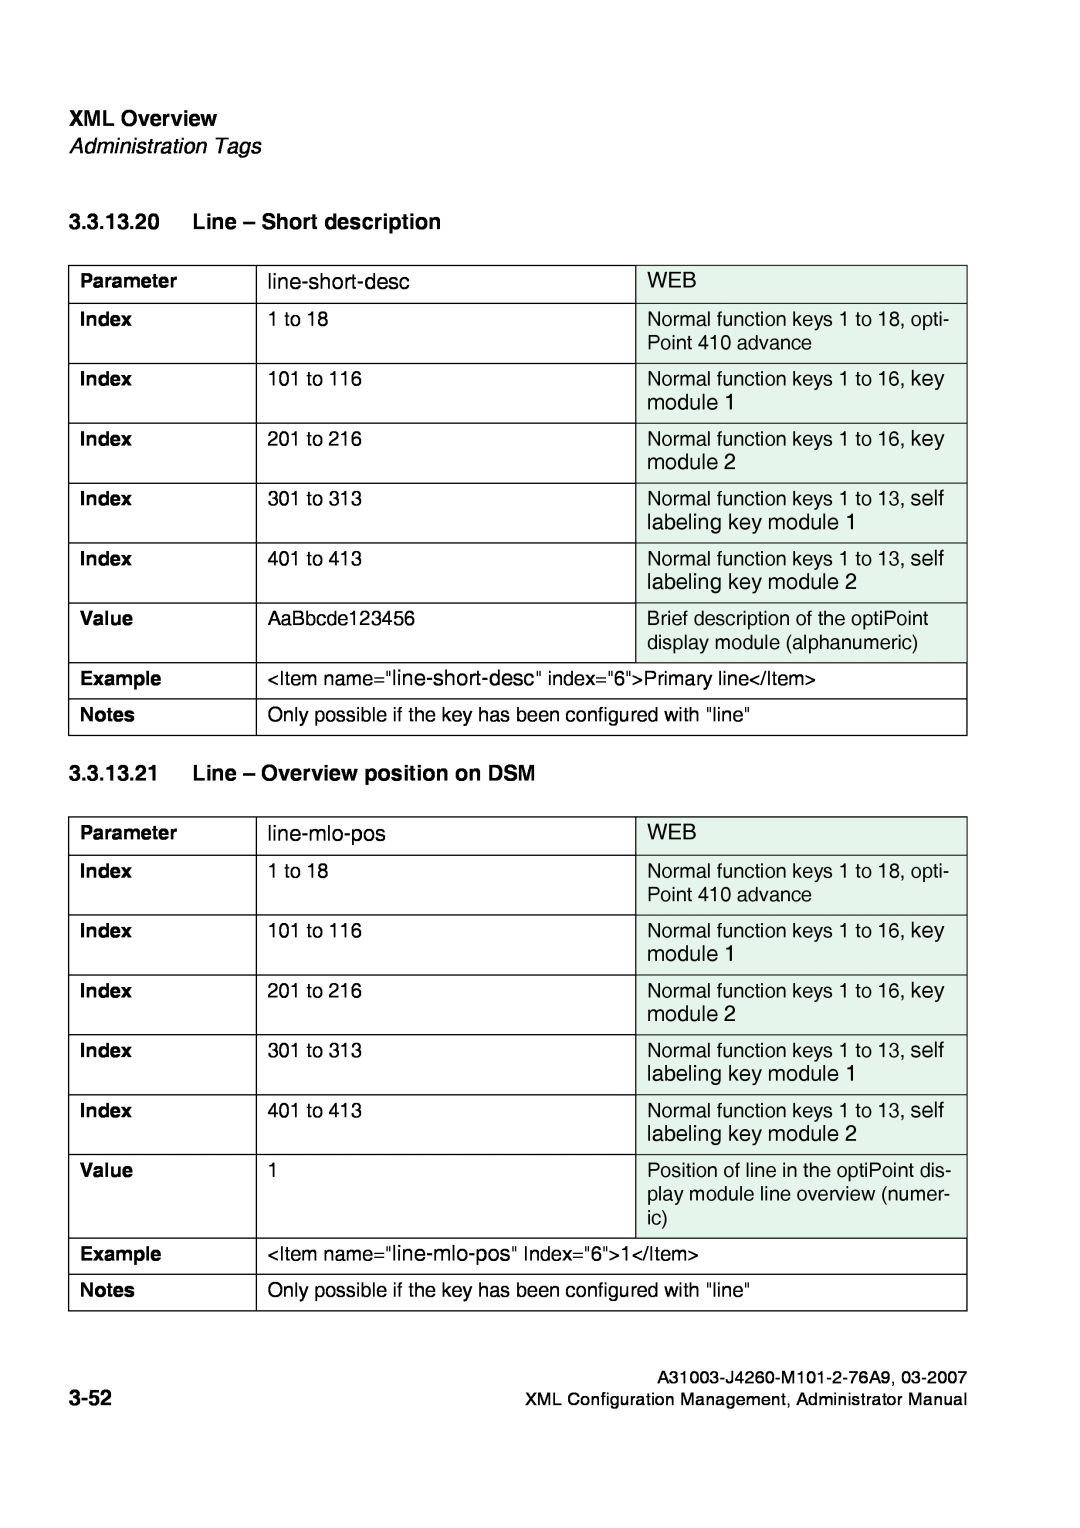 Siemens 420 S V6.0 Line - Short description, Line - Overview position on DSM, 3-52, XML Overview, Administration Tags 